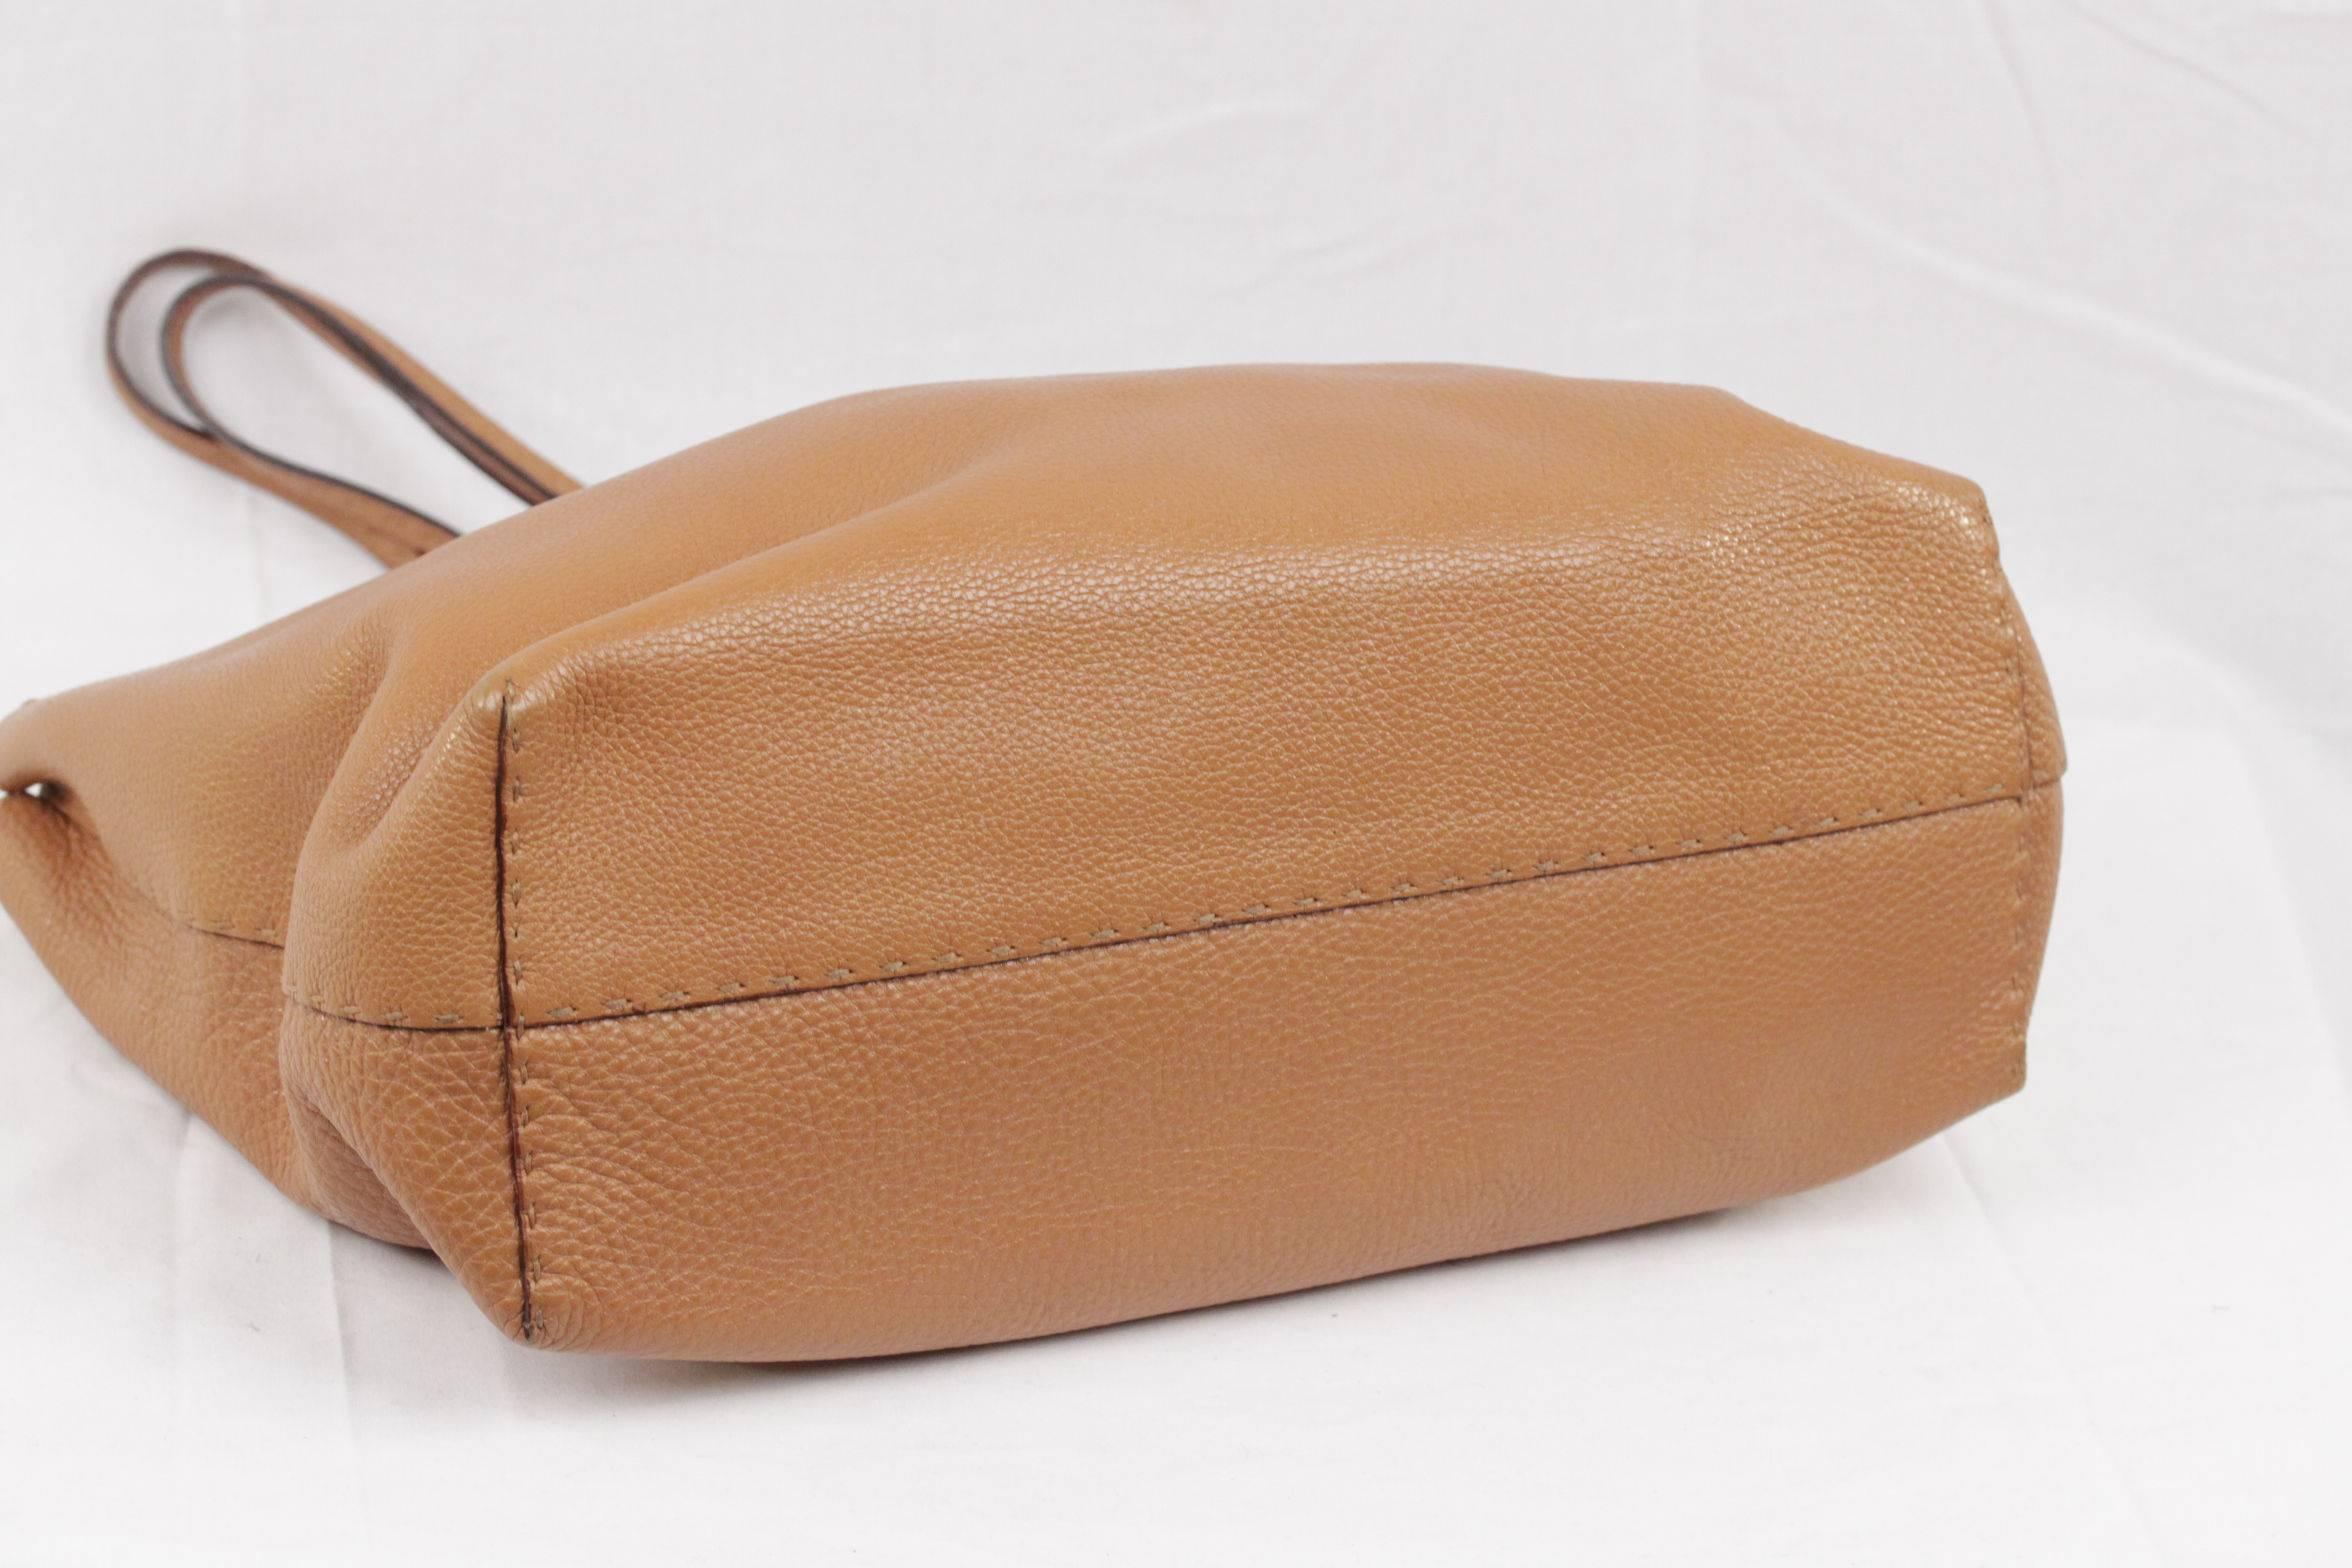 Orange FENDI SELLERIA Tan Leather TOTE Shoulder Bag SHOPPING Limited Edition